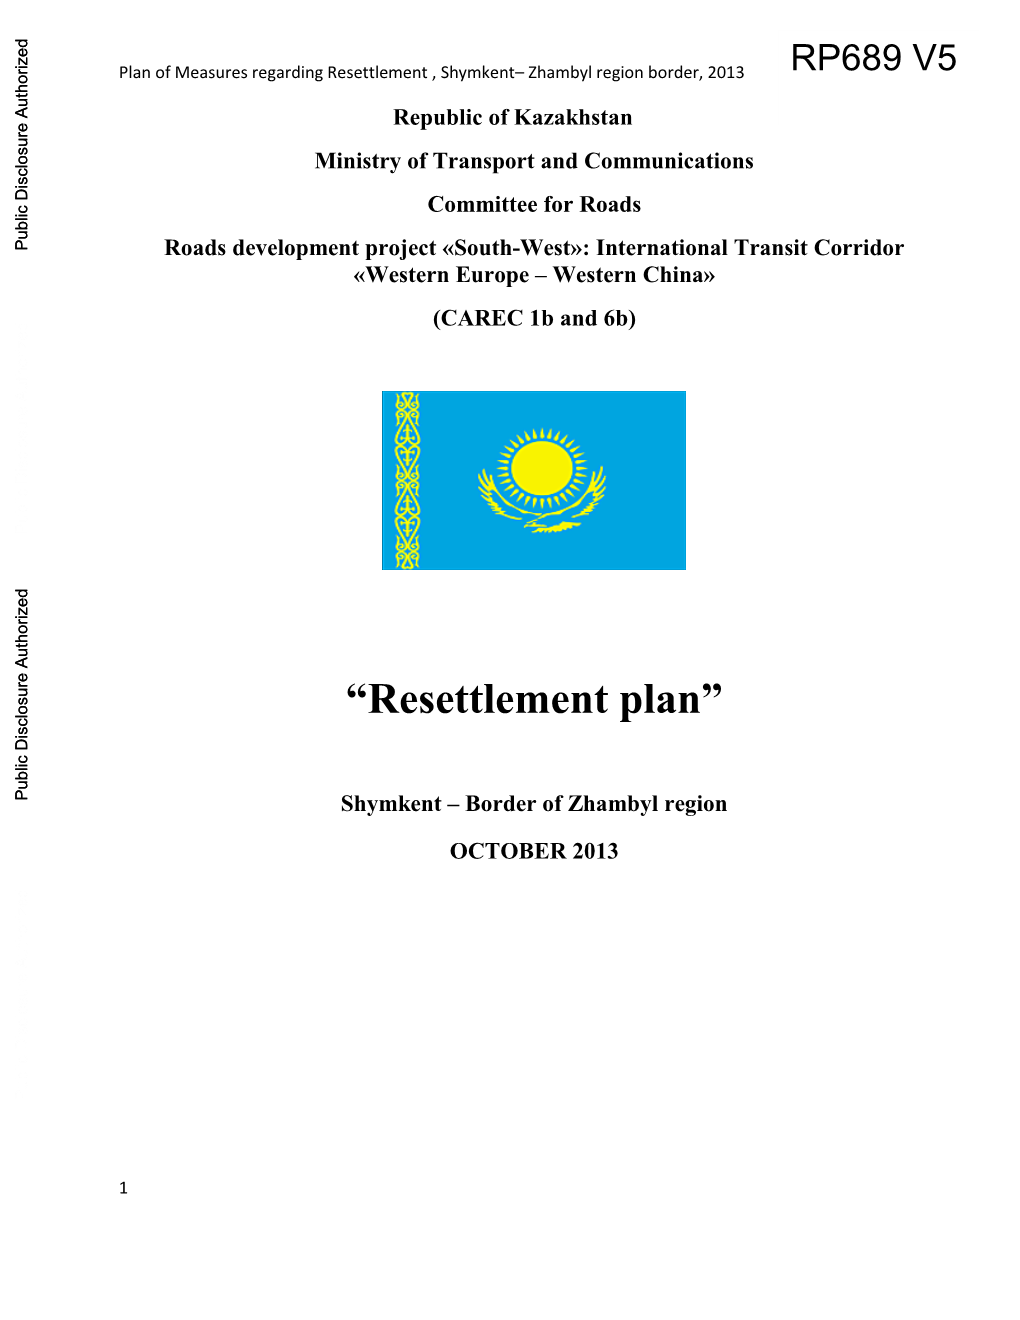 Resettlement Plan”